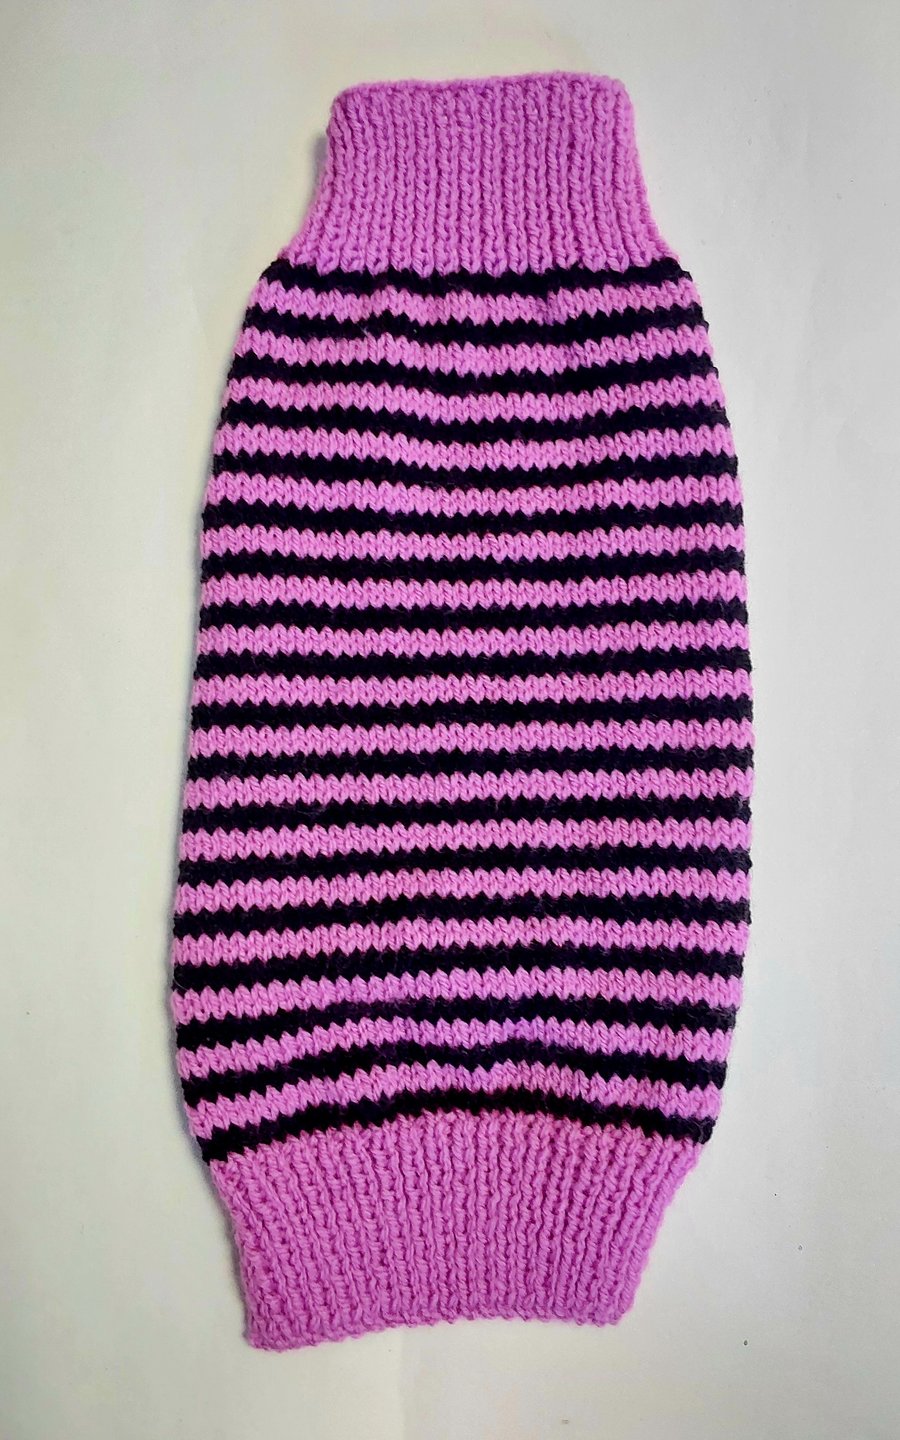 Medium dog puppy sweater jumper coat 14”L 14”G hand knit (sleeveless)